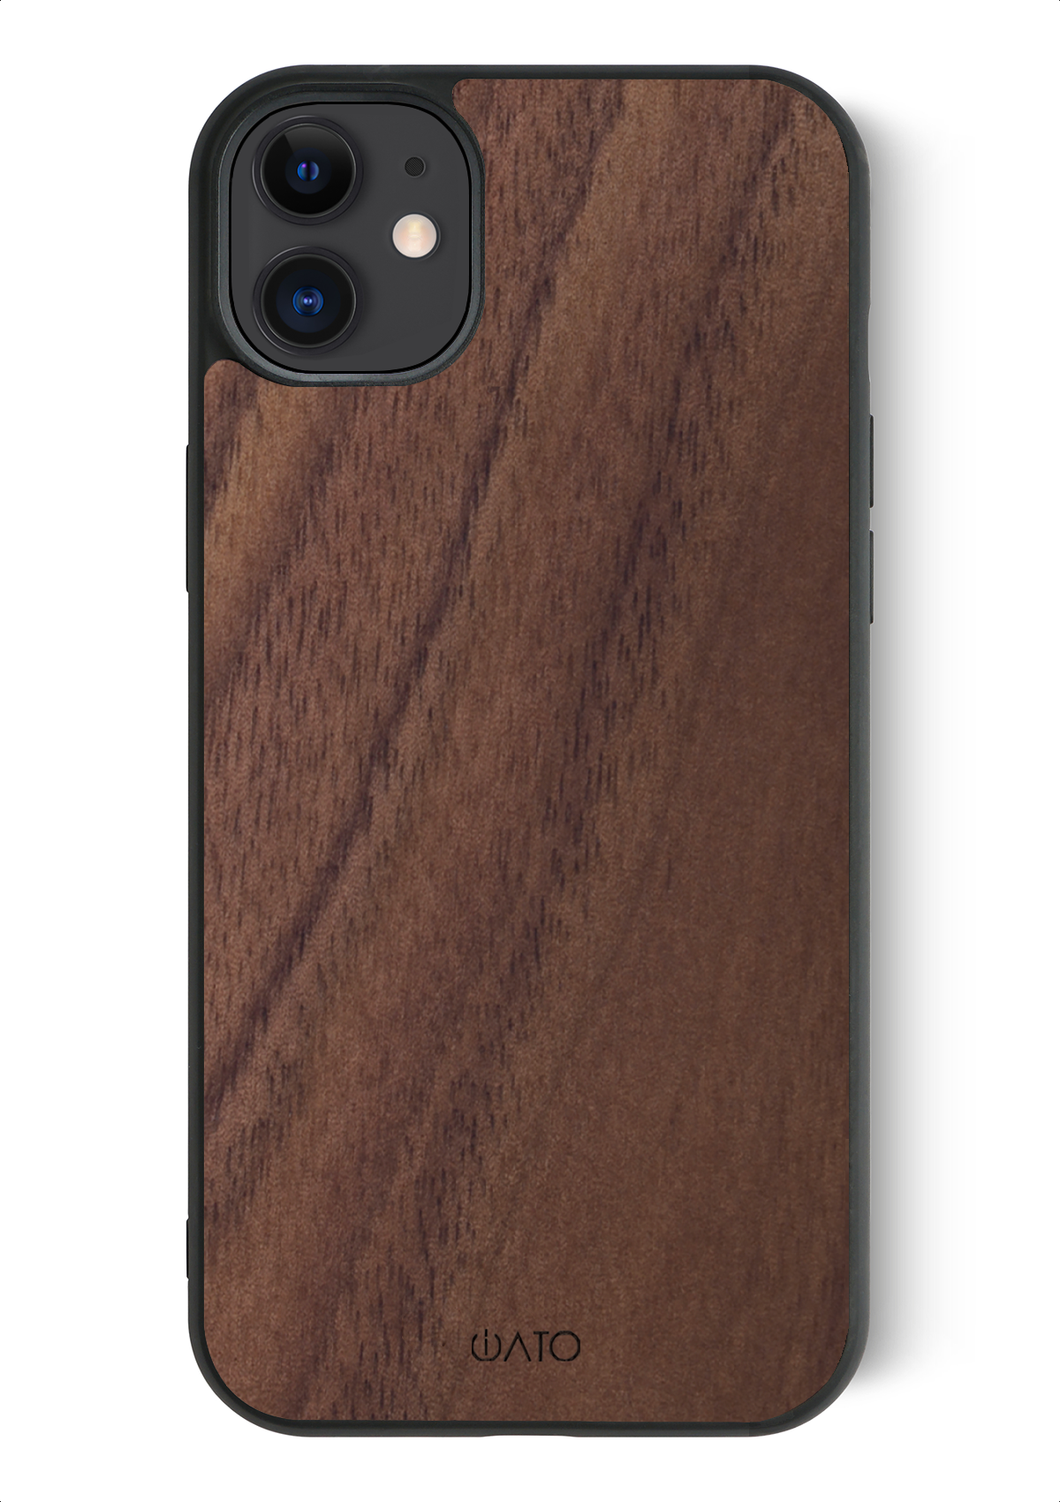 iPhone 11 - iATO Walnut Wood Case - Protective Design. - iATO Awesome